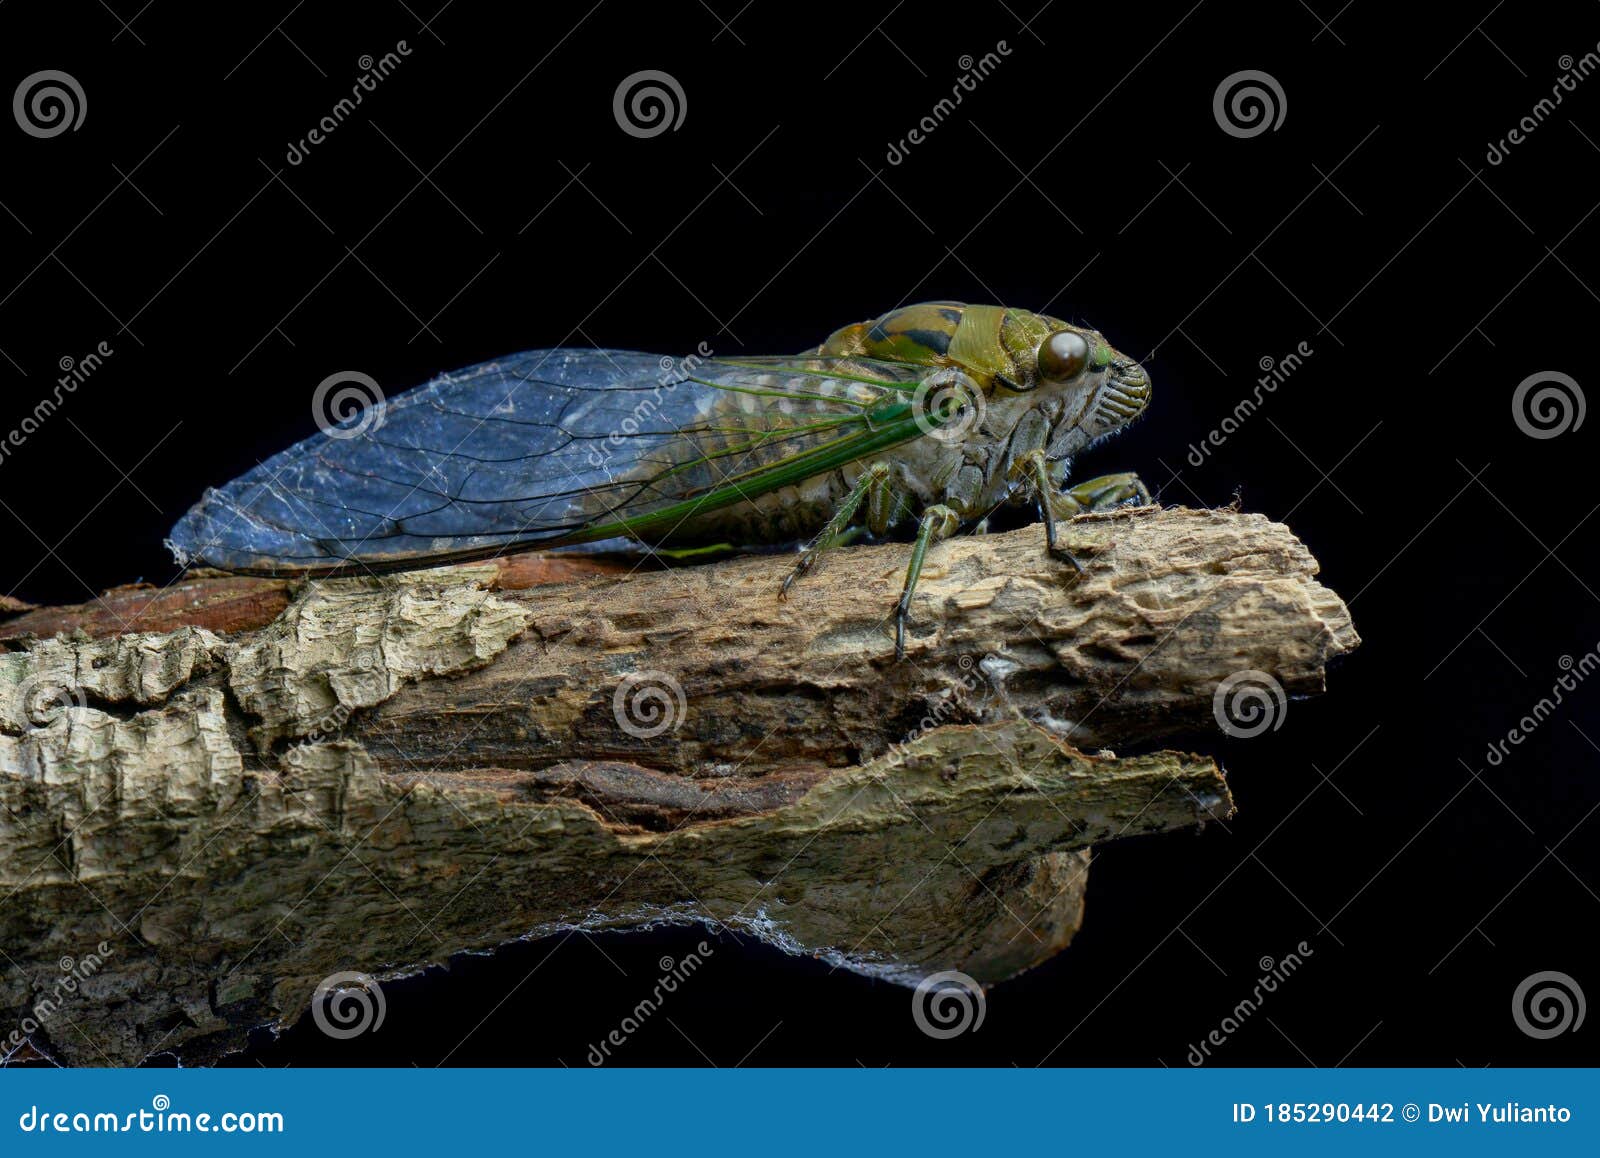 cicadae macro photograpy